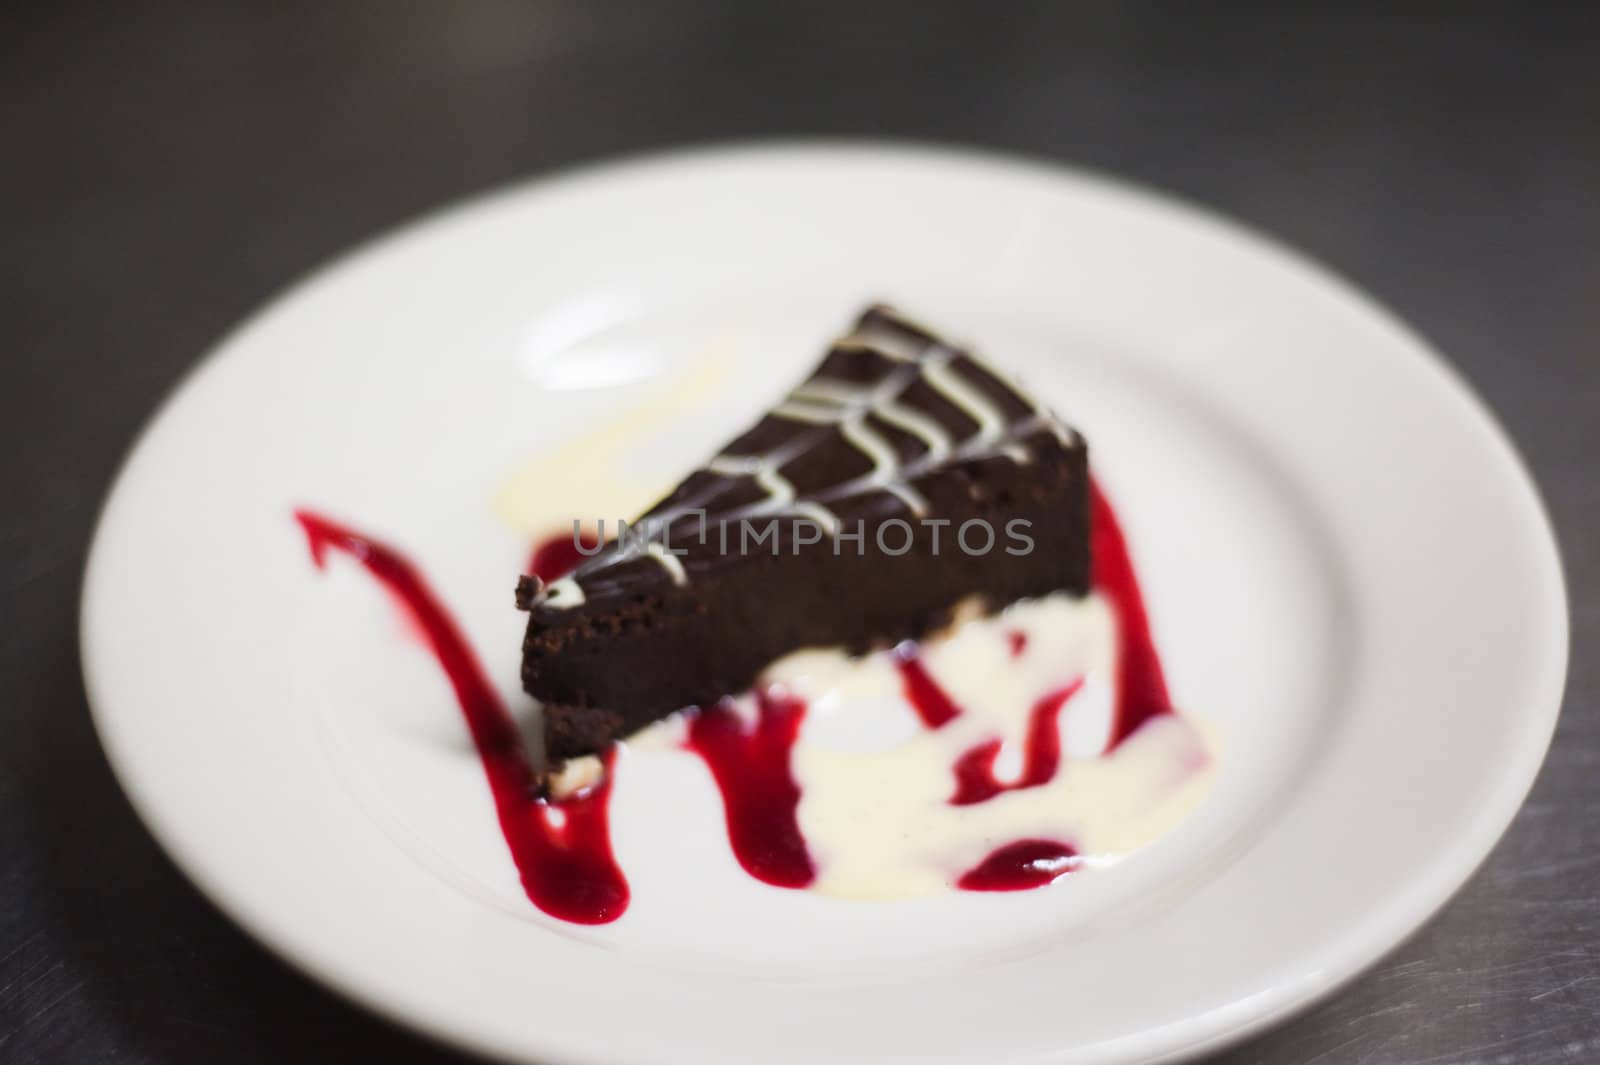 Chocolate cake tip focus by edan